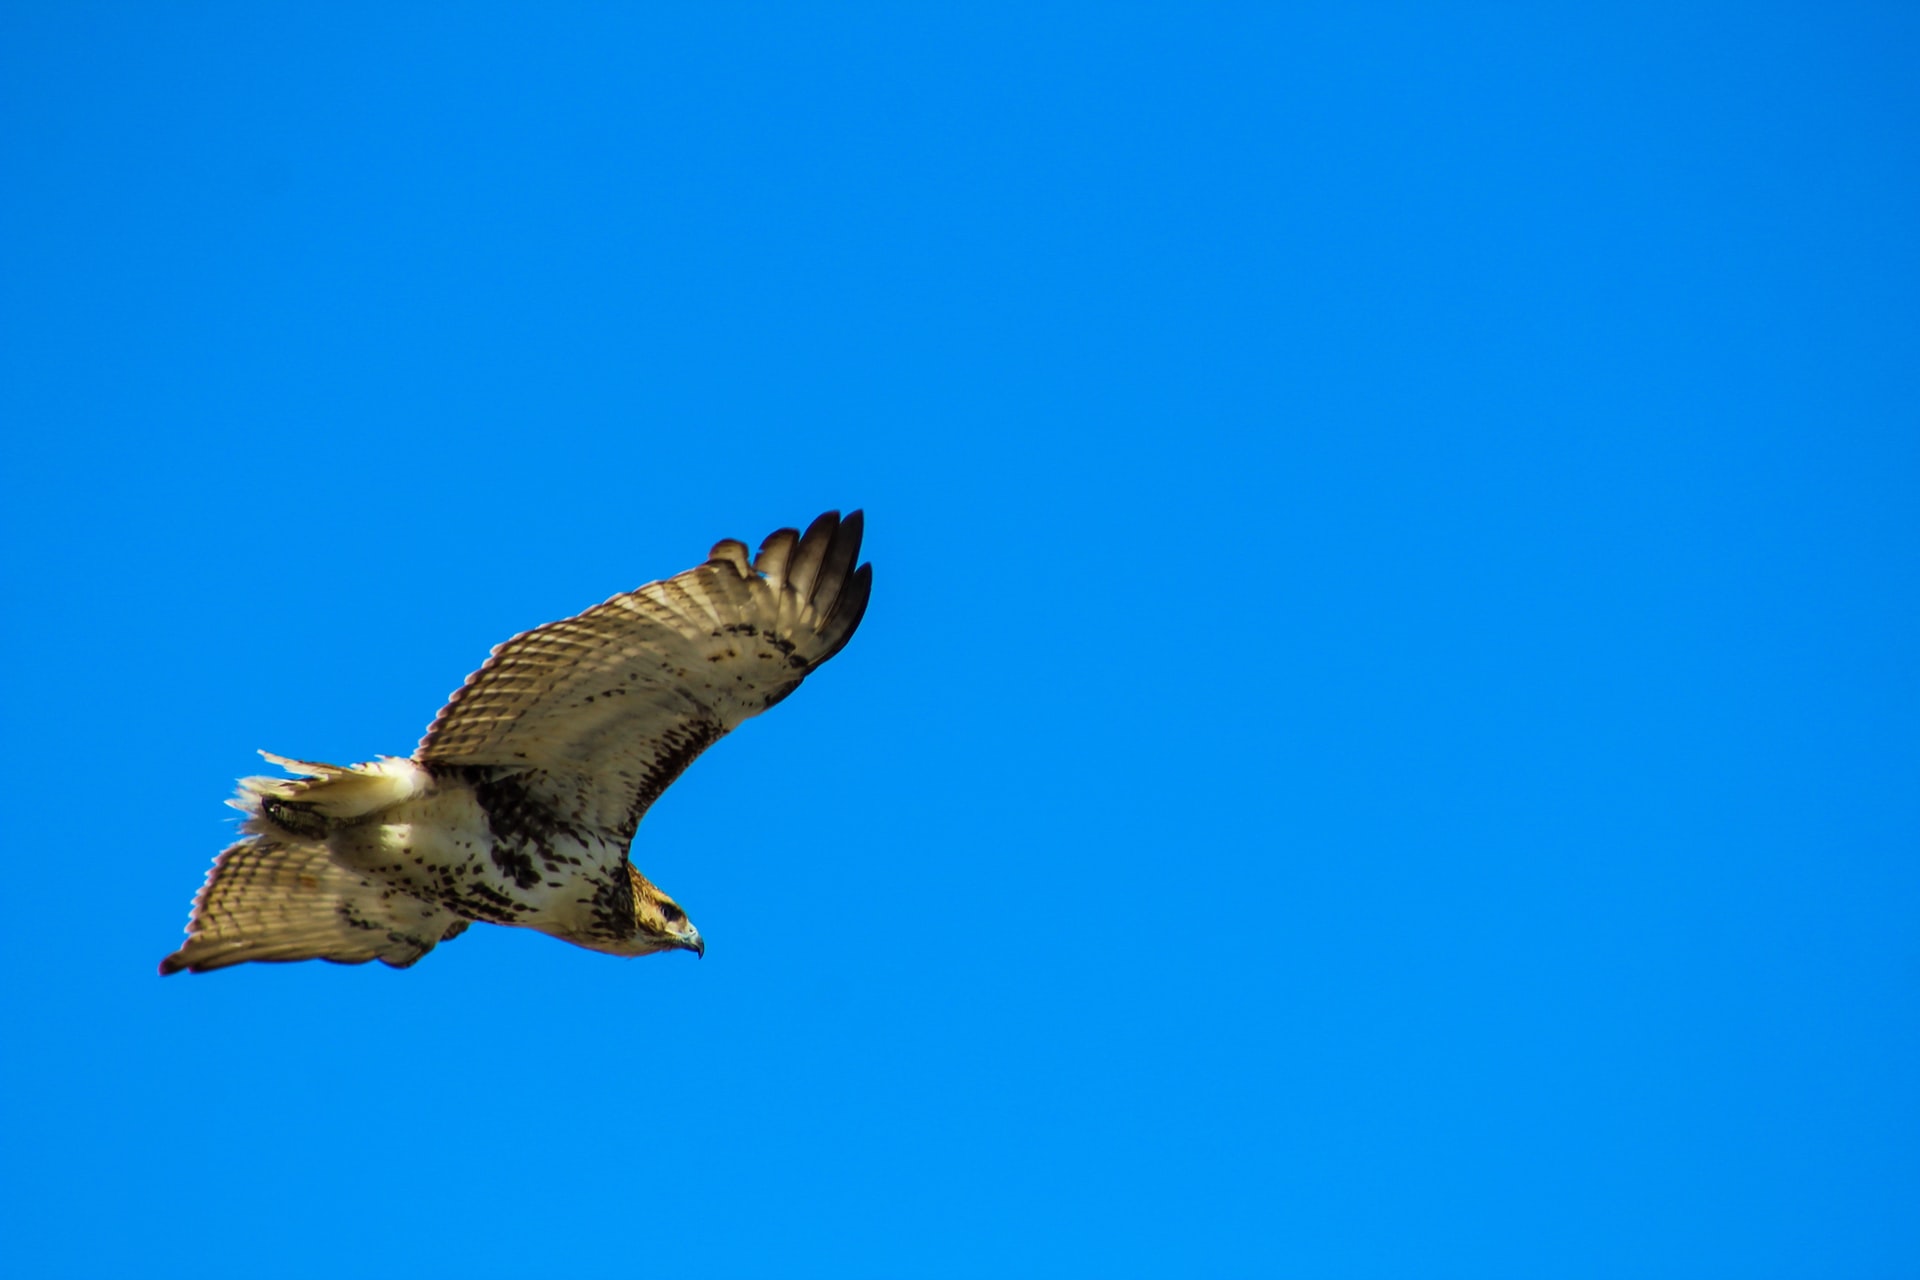 Photo of a hawk in flight agains a bright blue sky.